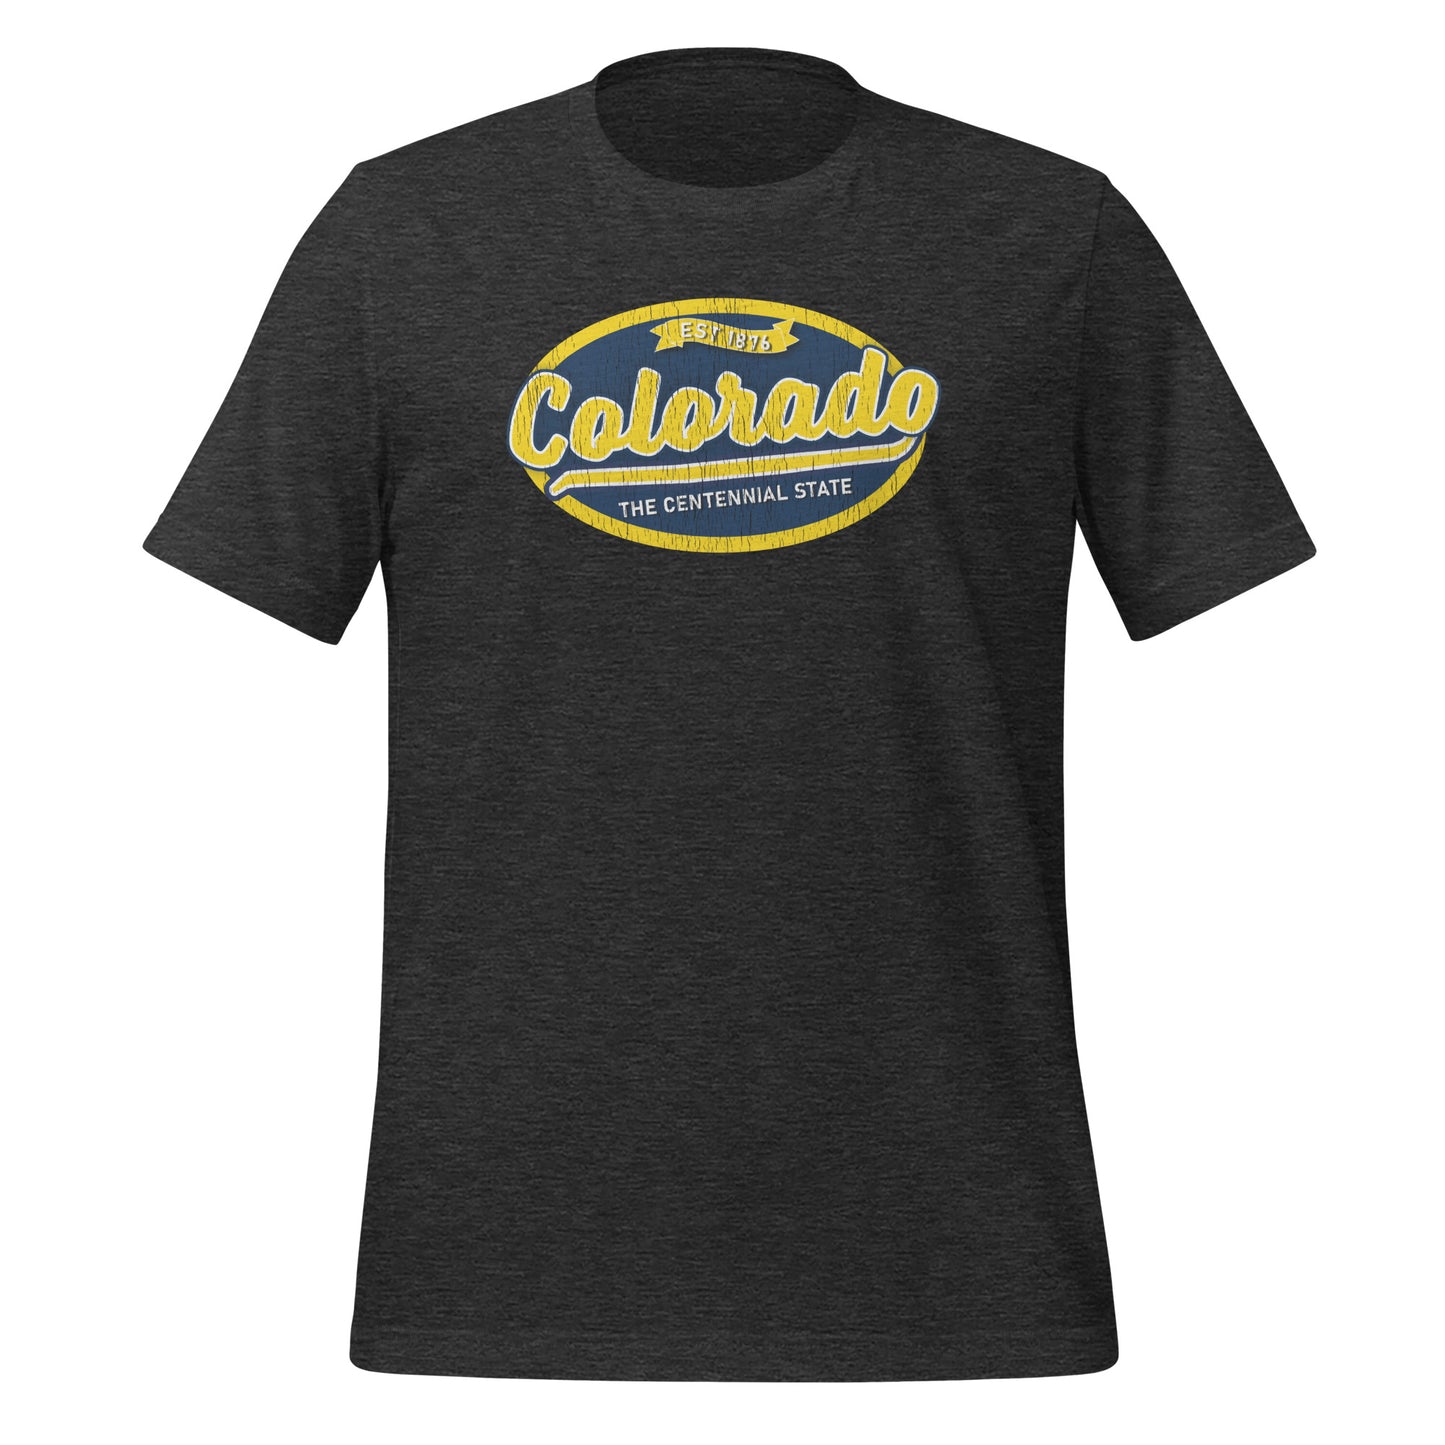 Colorado The Centennial State t-shirt